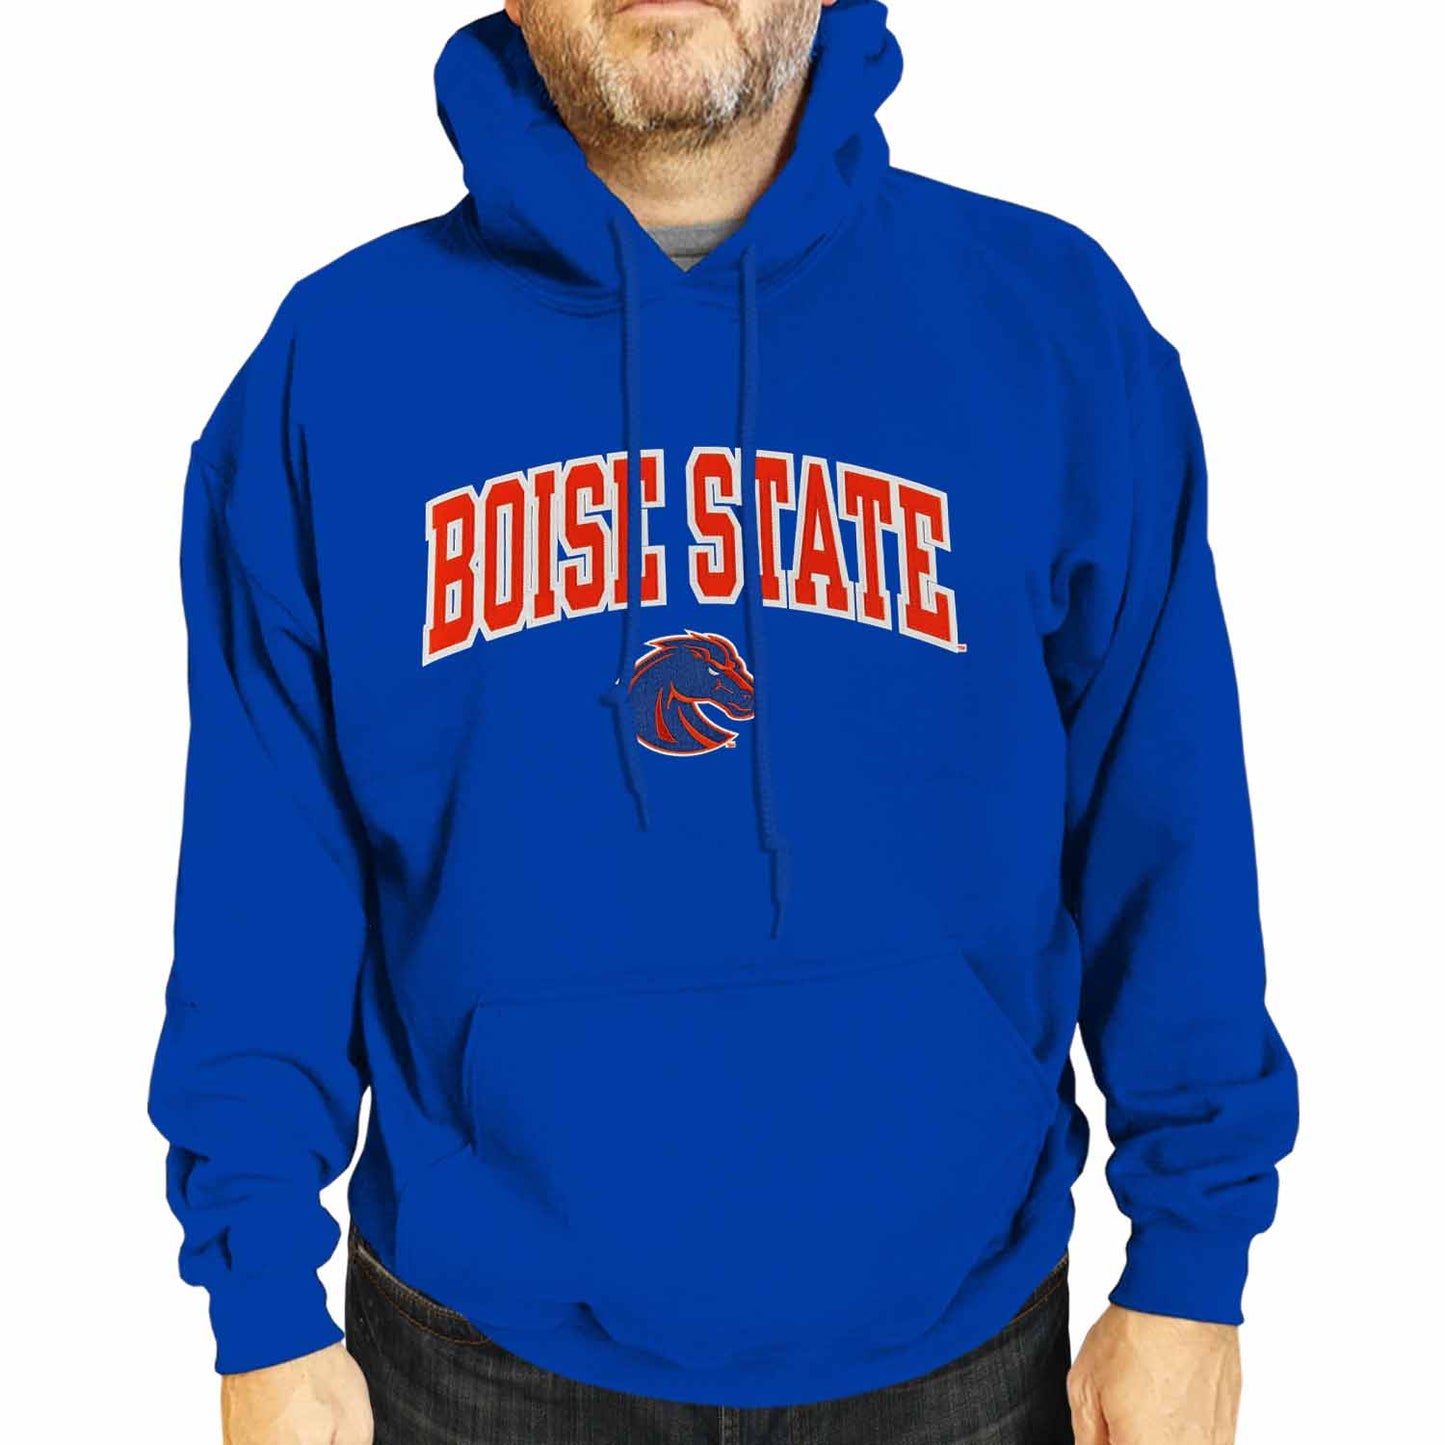 Boise State Broncos NCAA Adult Tackle Twill Hooded Sweatshirt - Royal